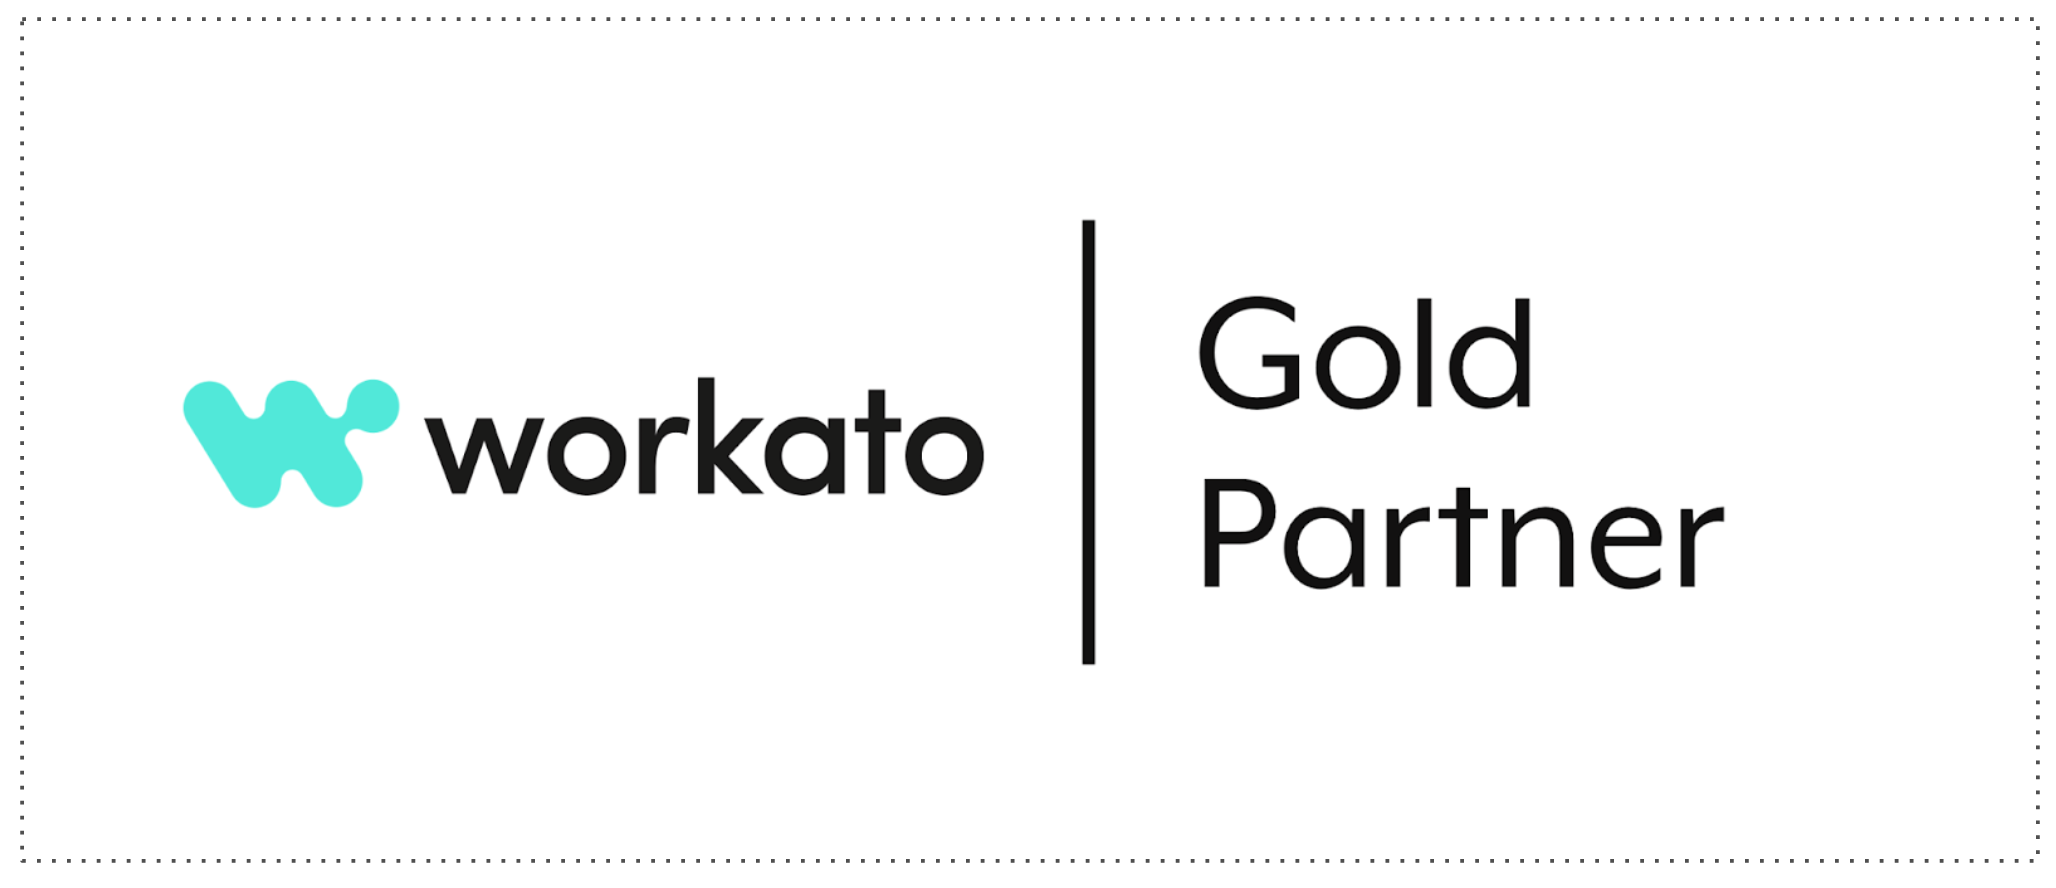 Workato Gold Partner